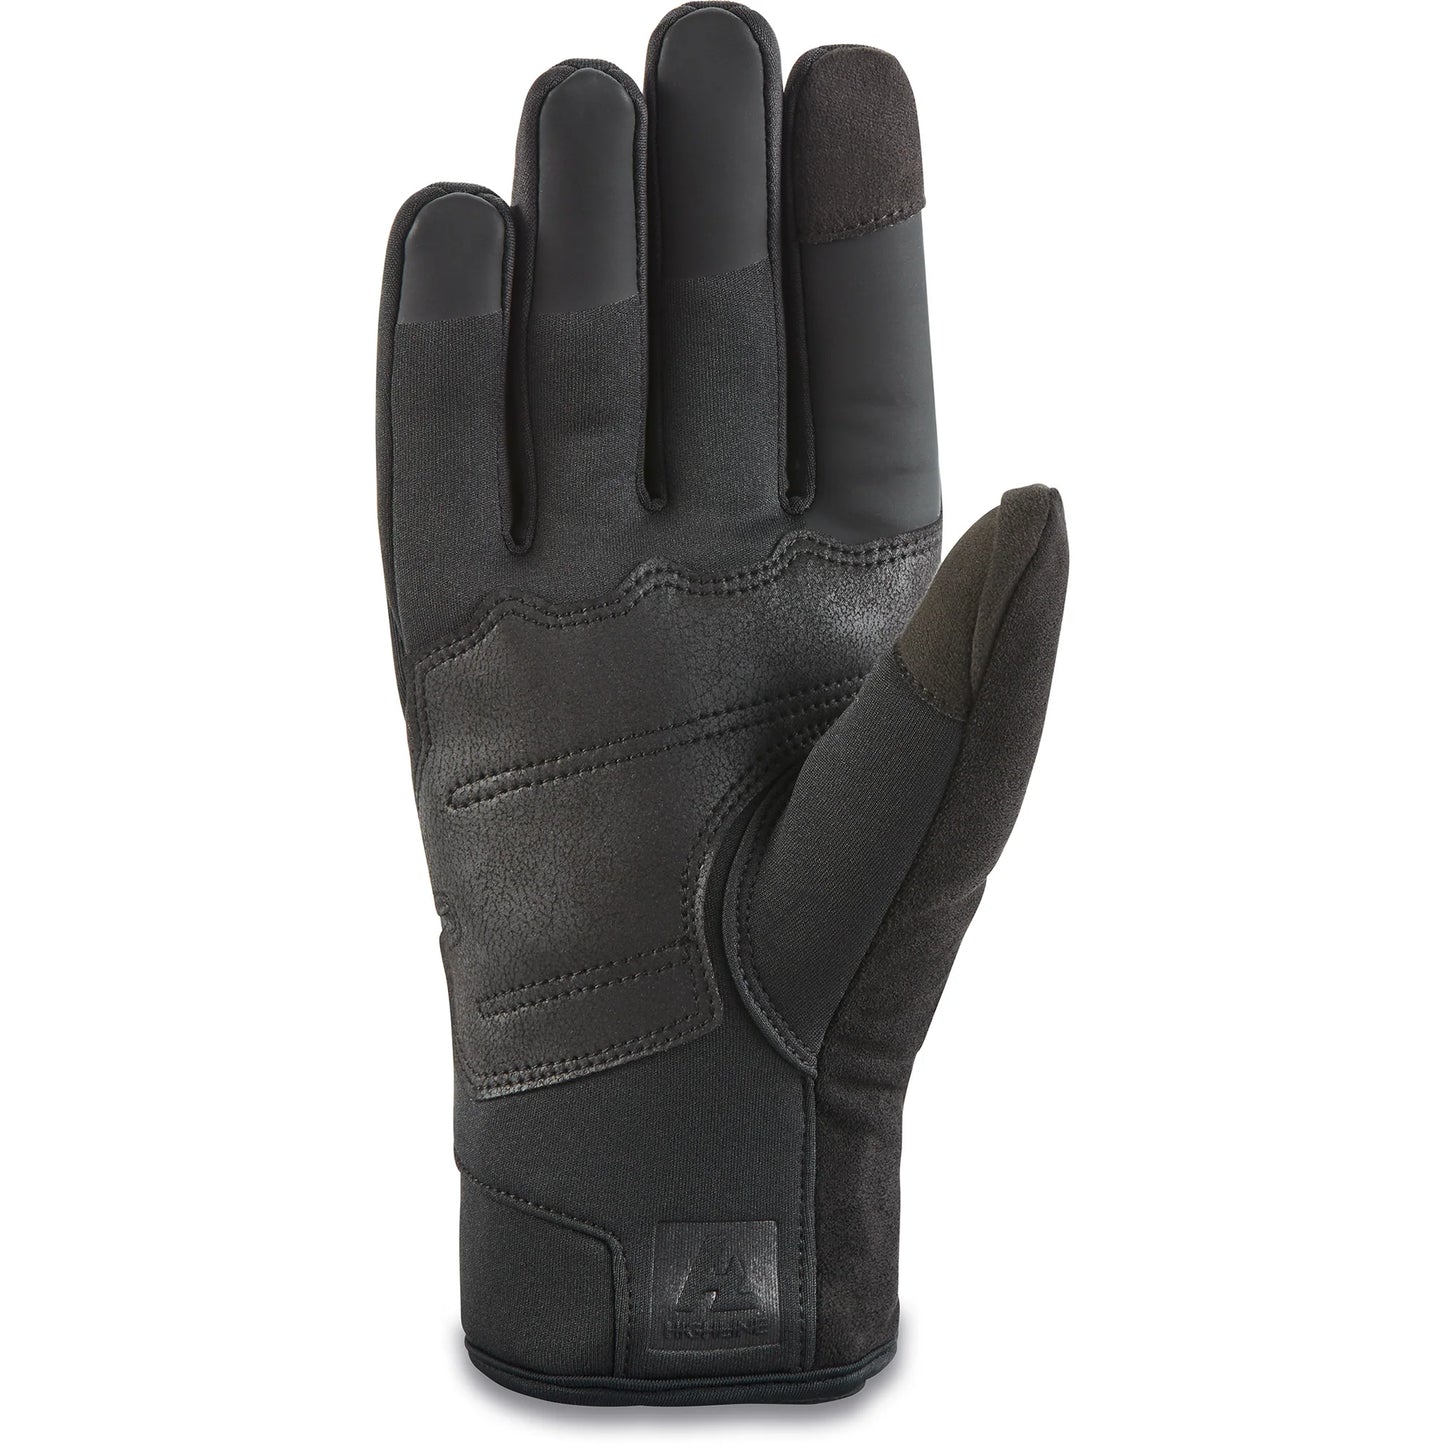 Dakine Men's Factor Infinium Glove - Black